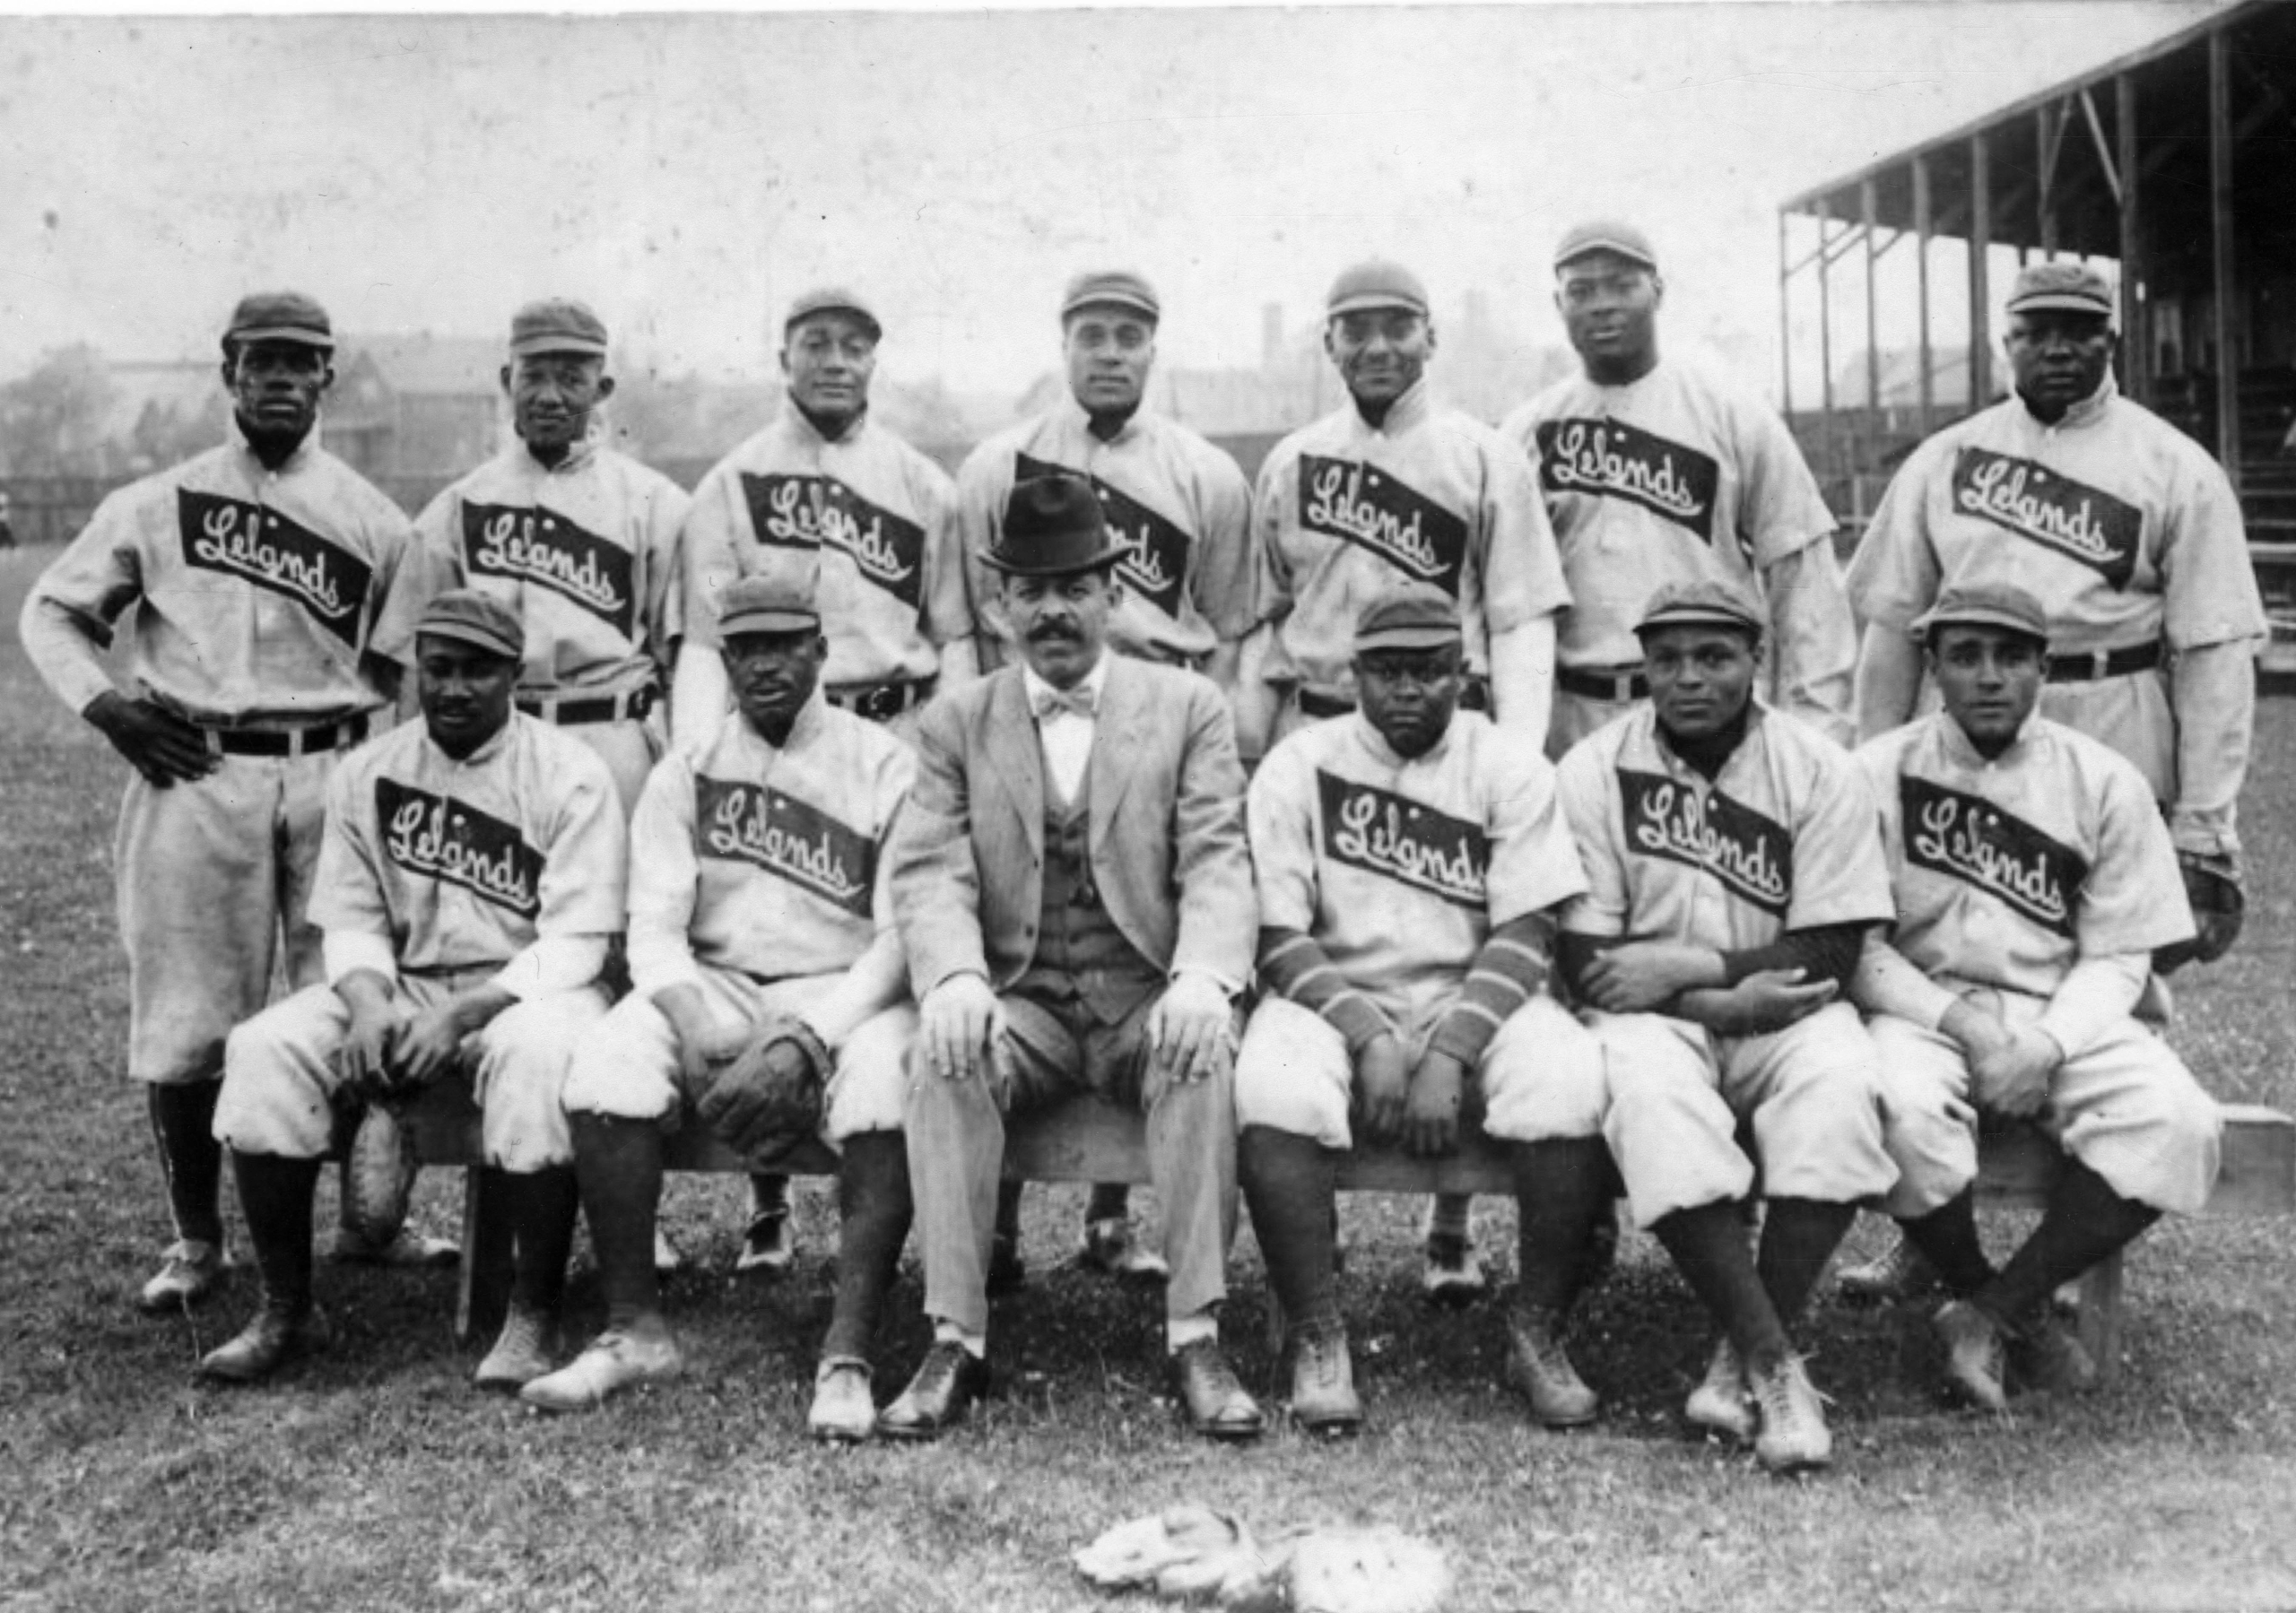 1904 Leland Giants baseball team (SABR-Rucker Archive)